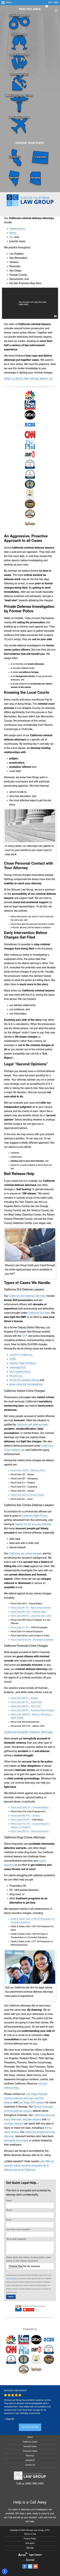 Shouse Law Group - San Jose CA Lawyers